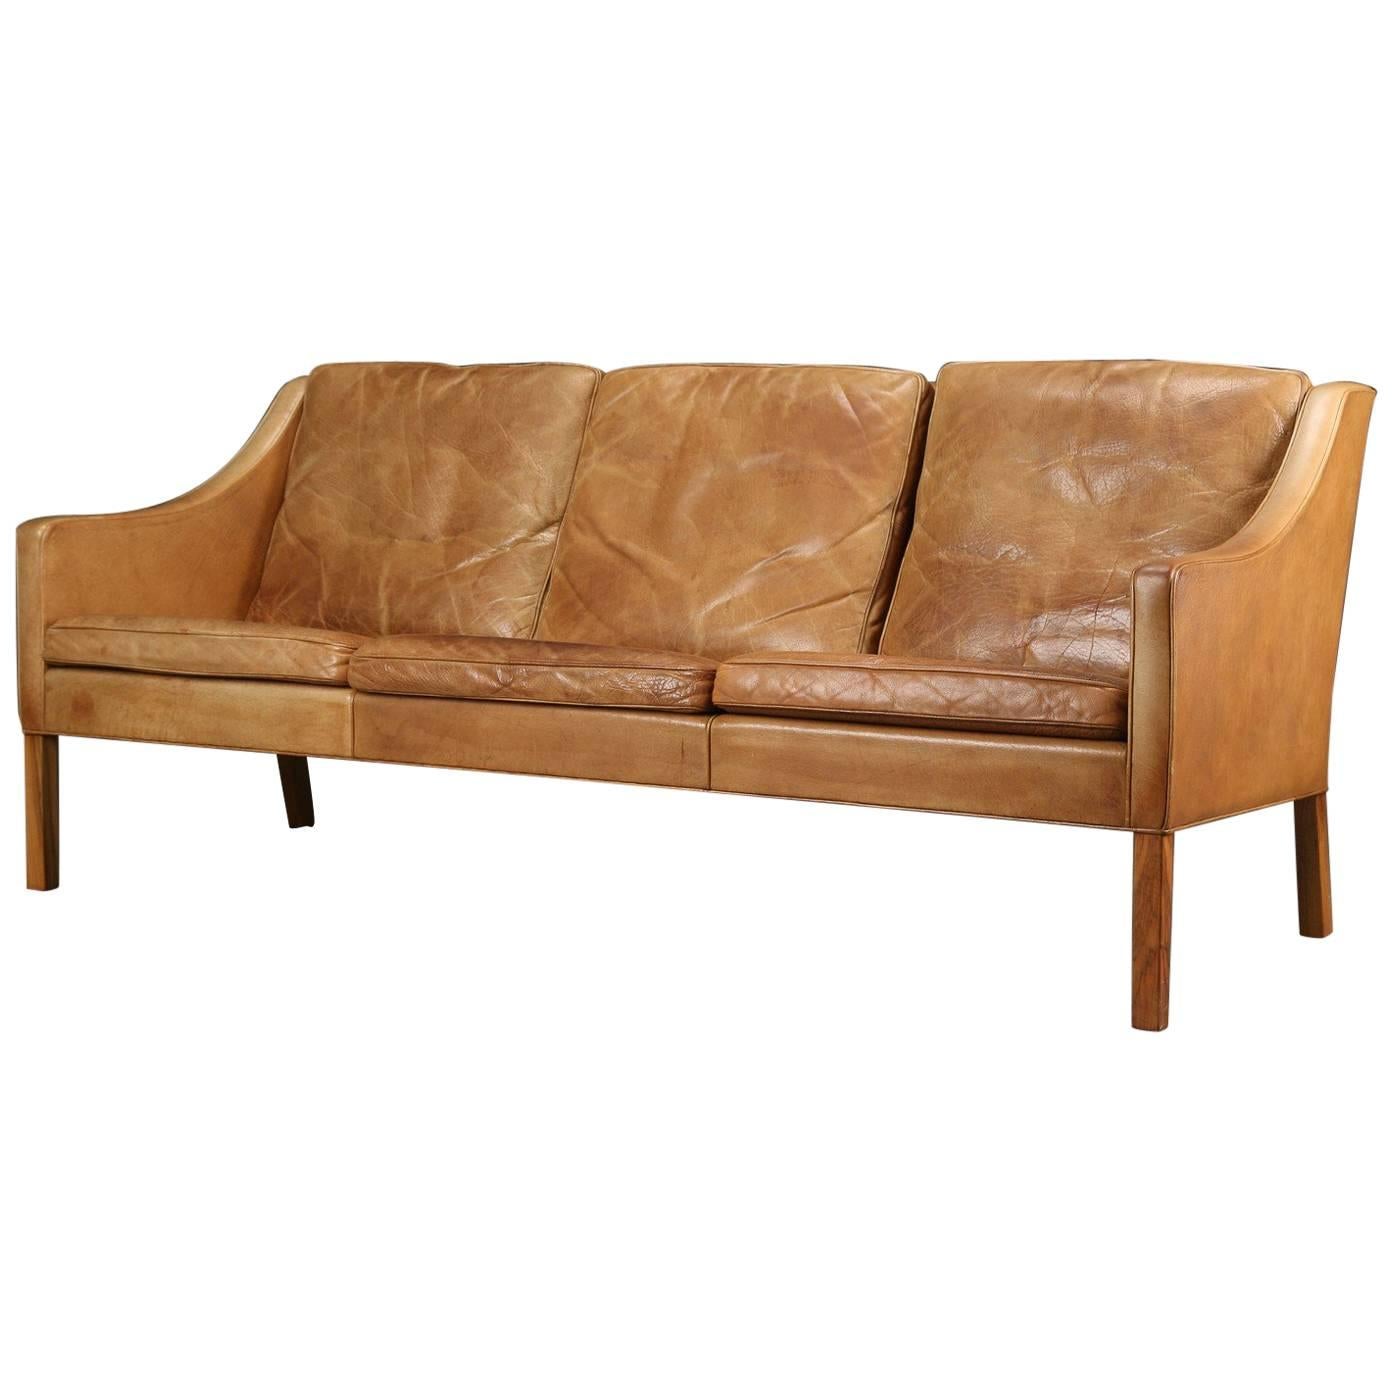 Original Borge Mogensen 2209 Sofa in Patinated Tan Leather, Denmark, 1960s-1970s